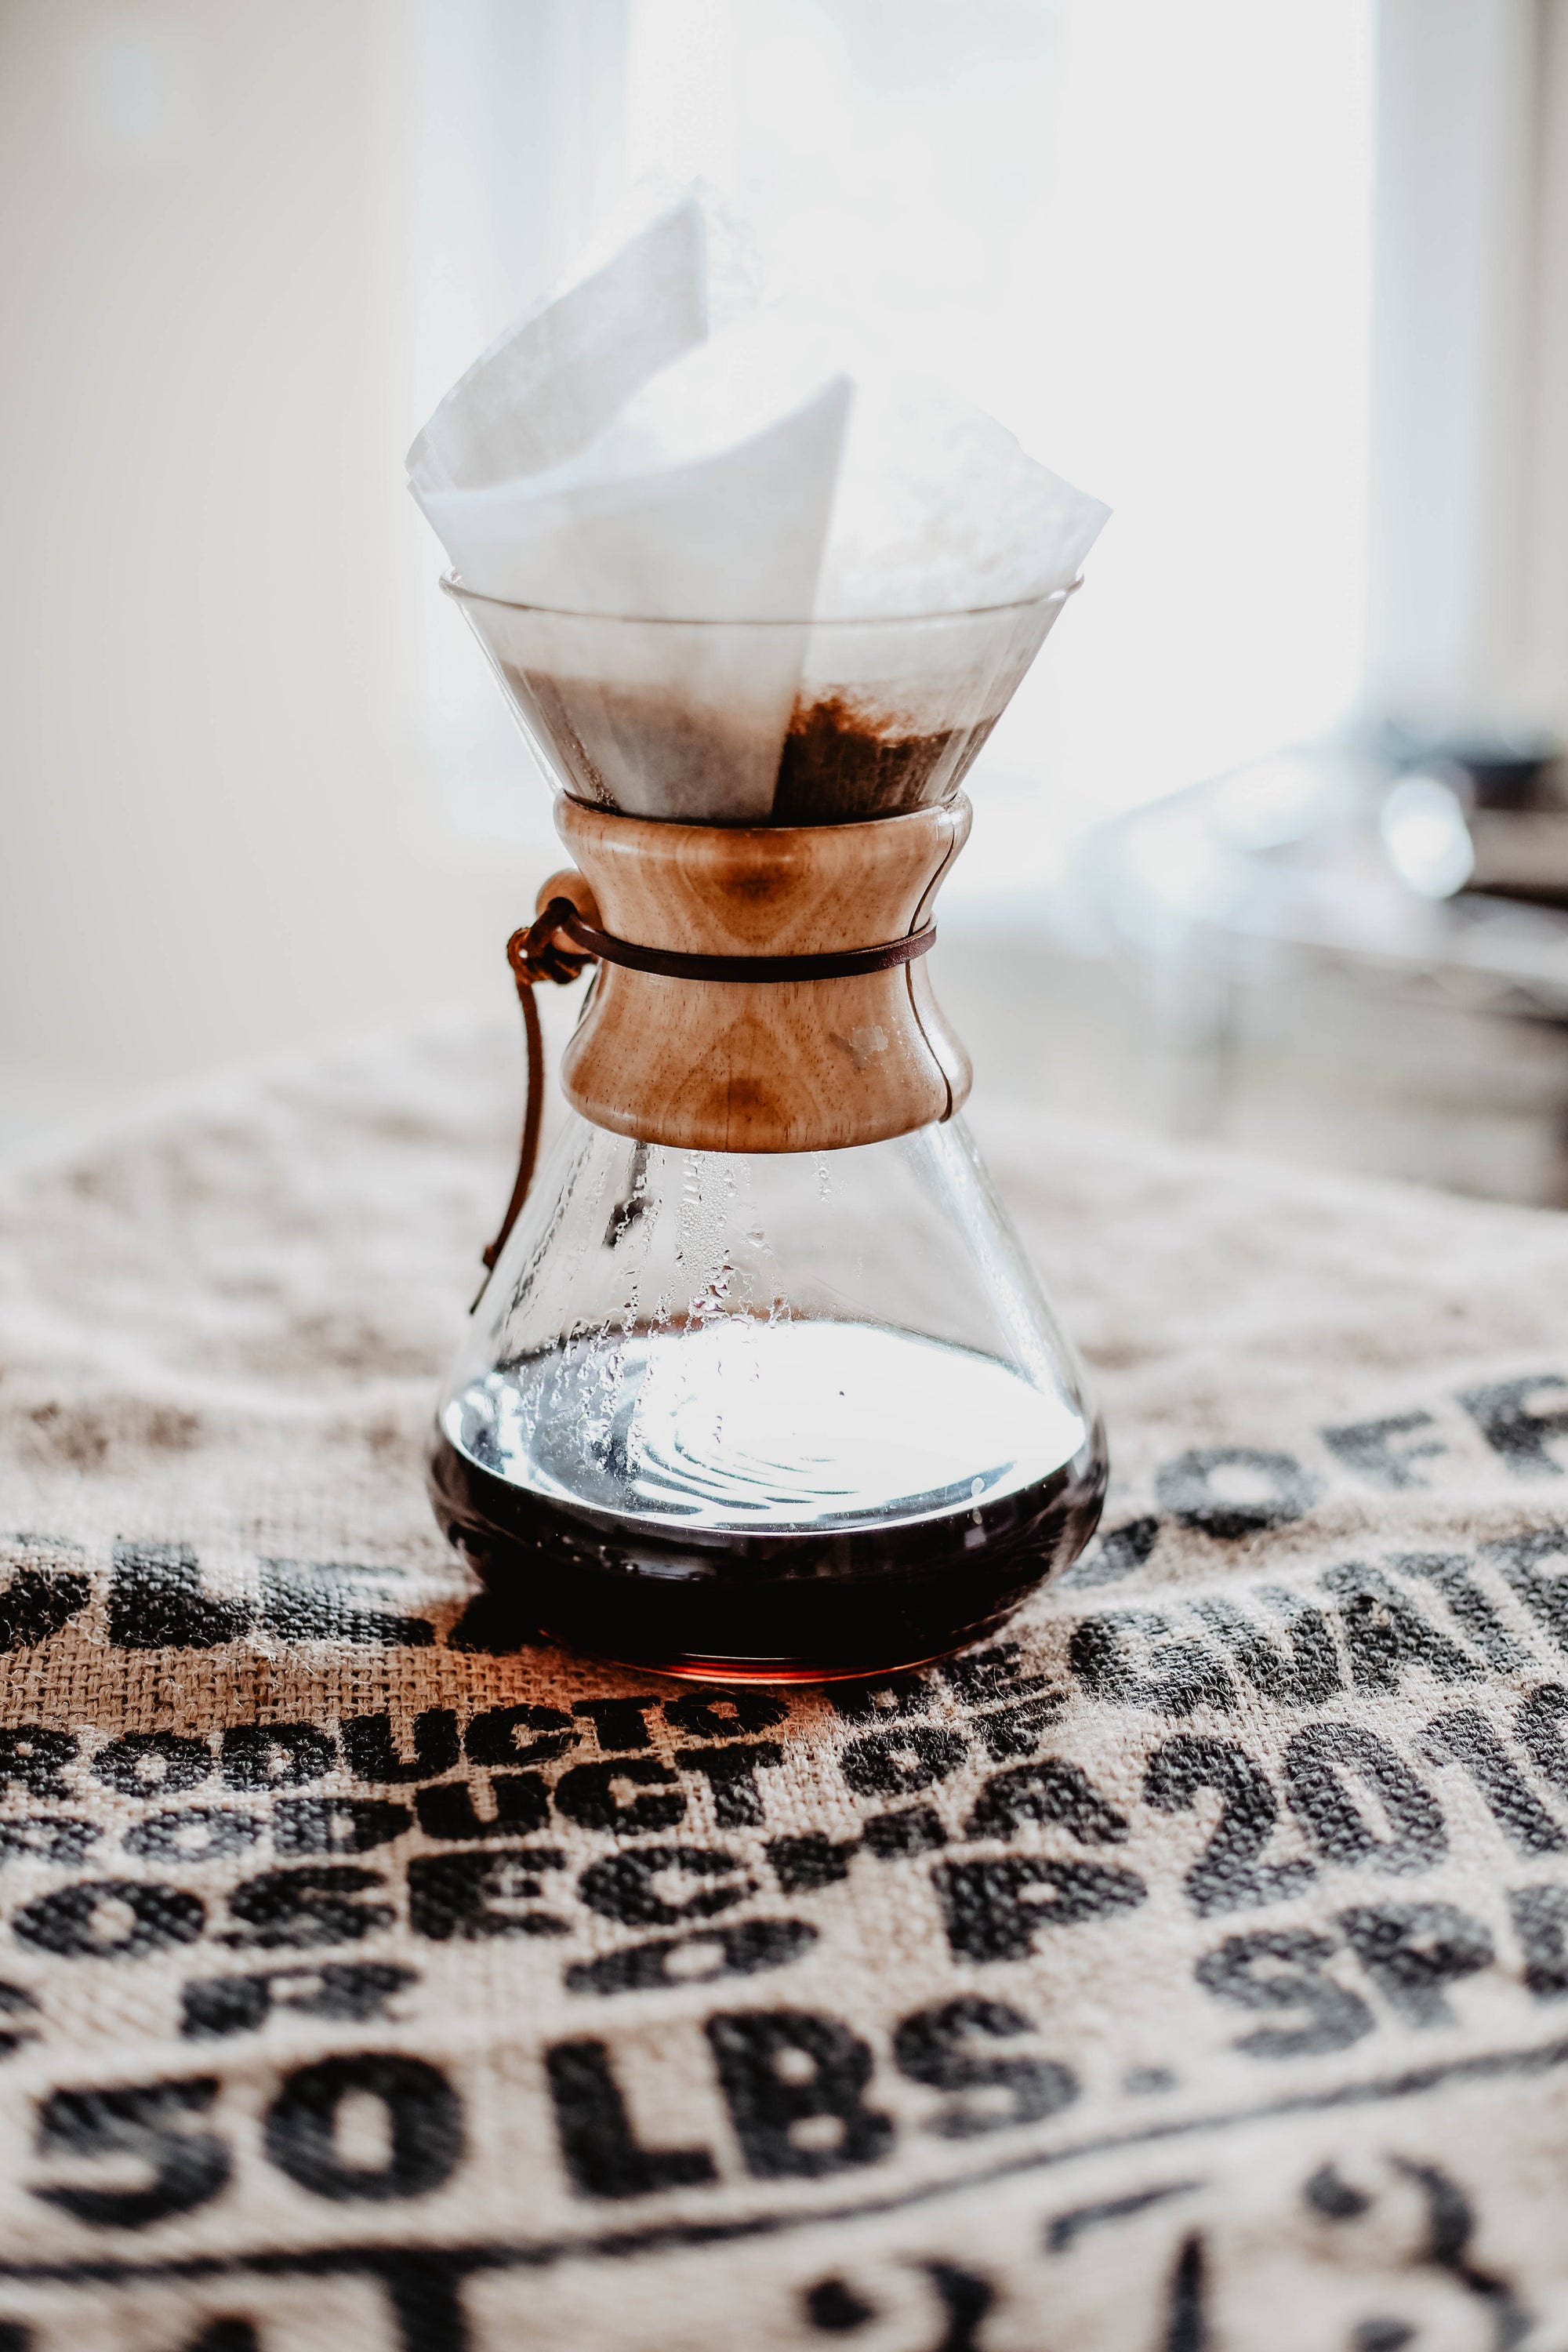 VLOG: 3-Step System to Taste Coffee